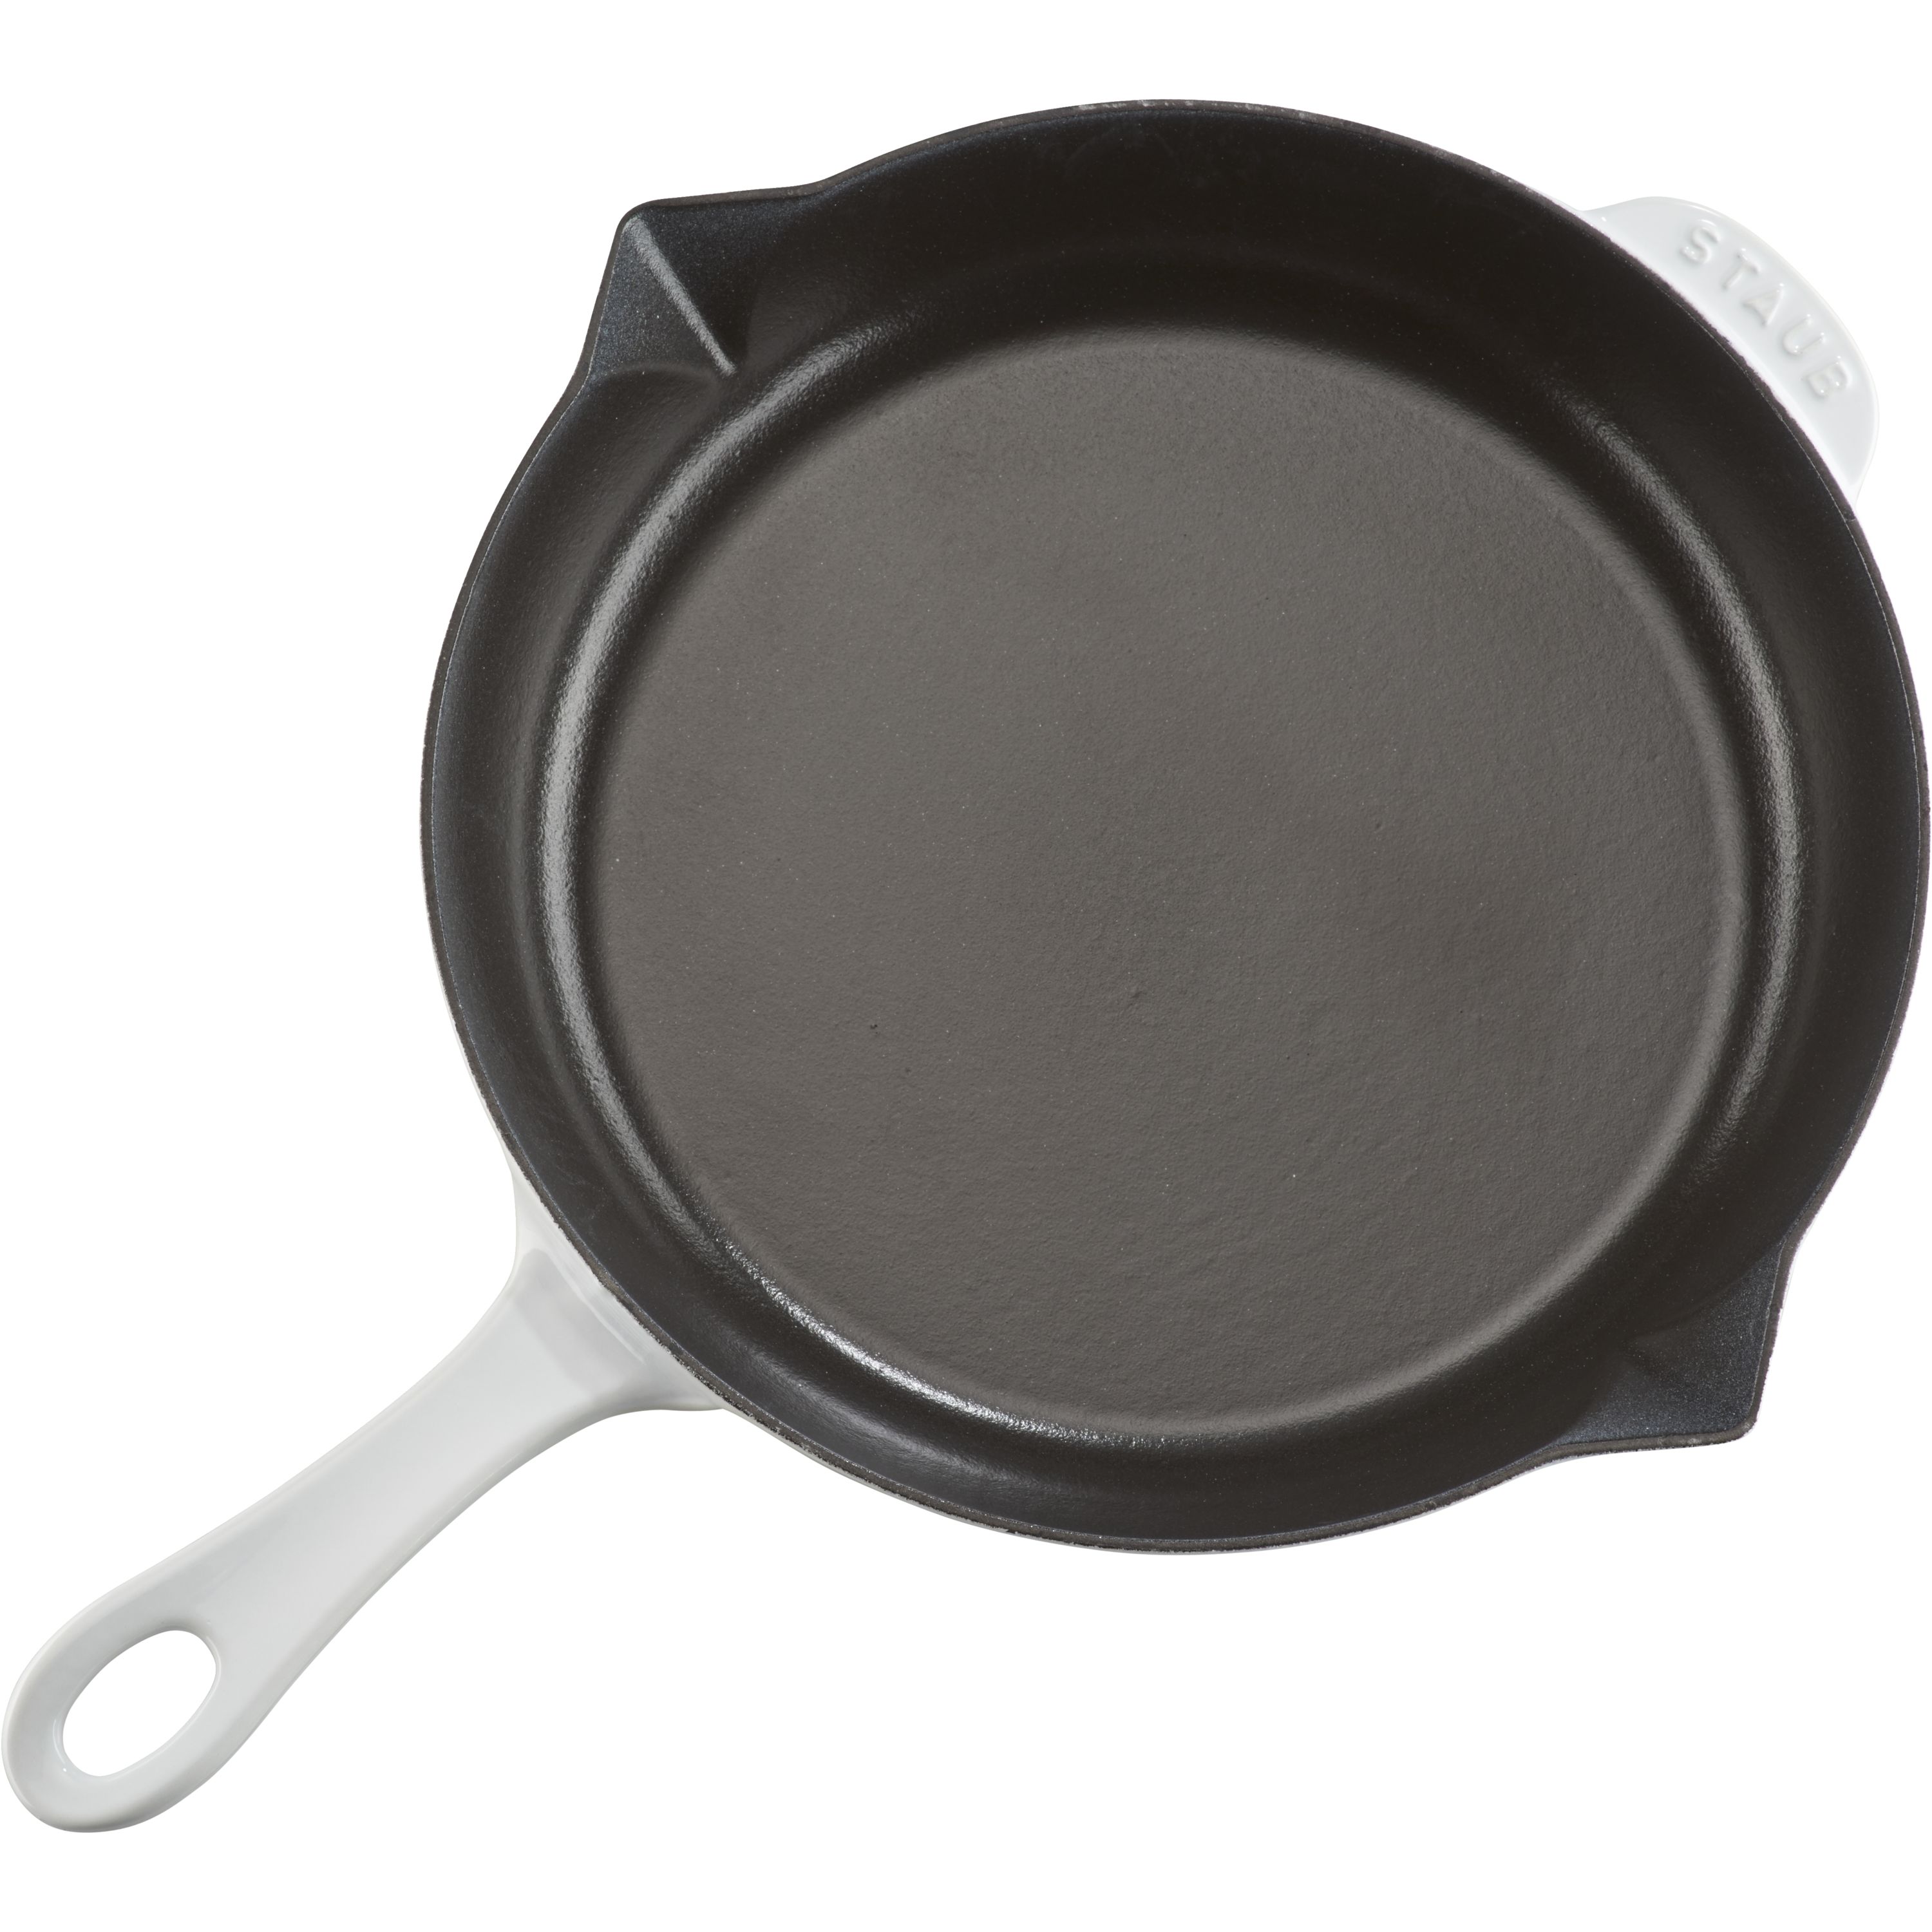 Staub Cast Iron 10-inch Fry Pan - Lilac : Target